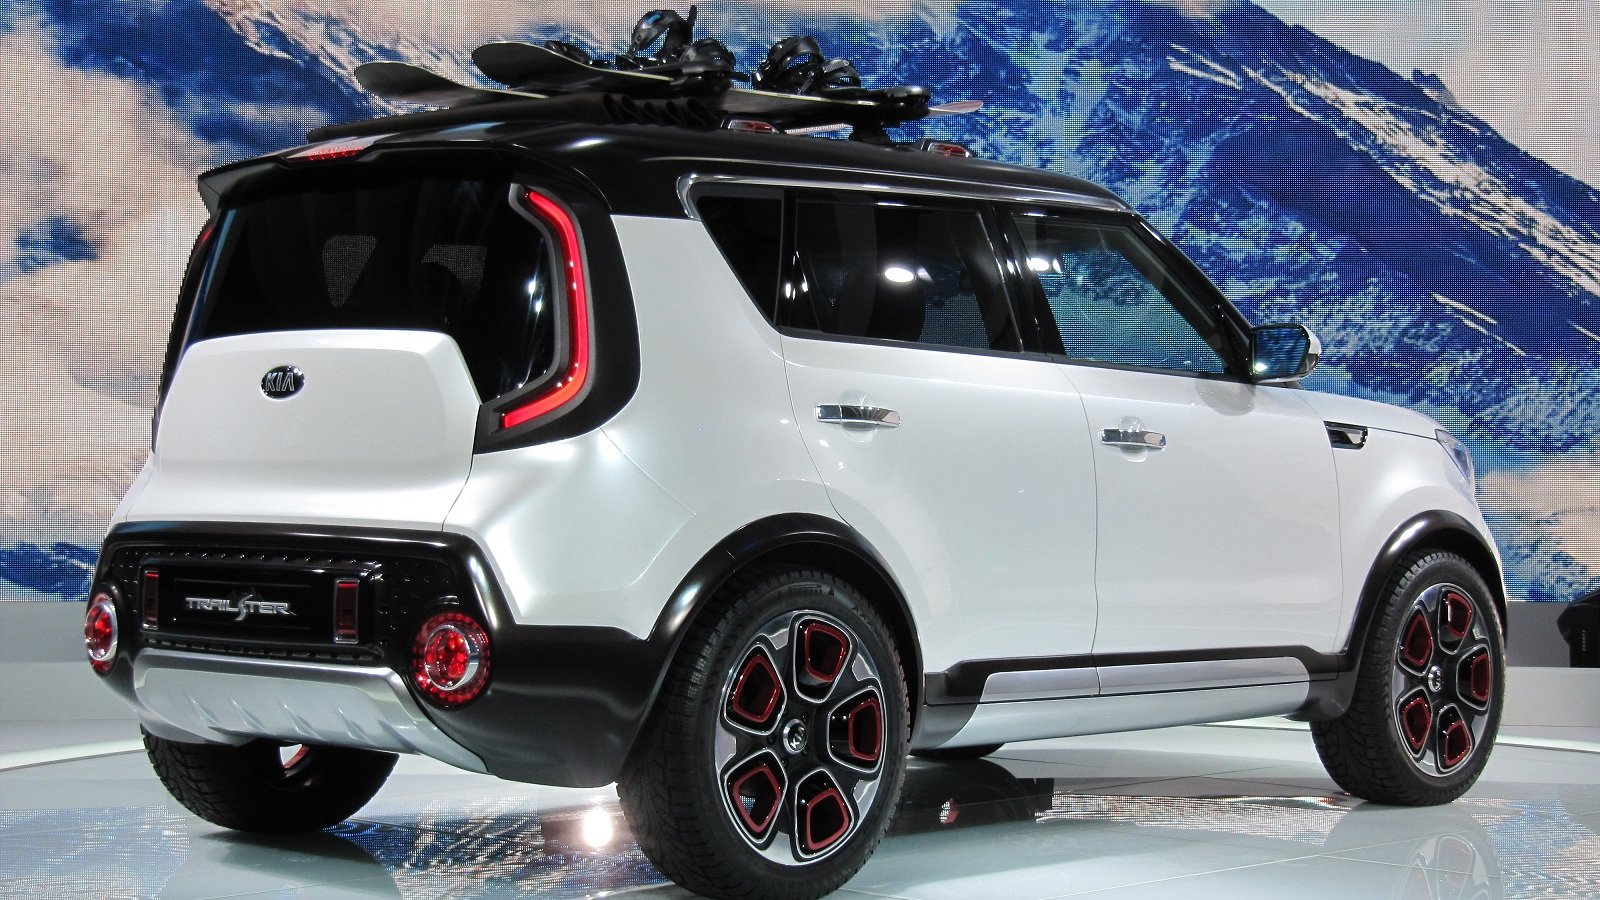 Kia Trail'ster e-AWD hybrid concept at 2015 Chicago Auto Show